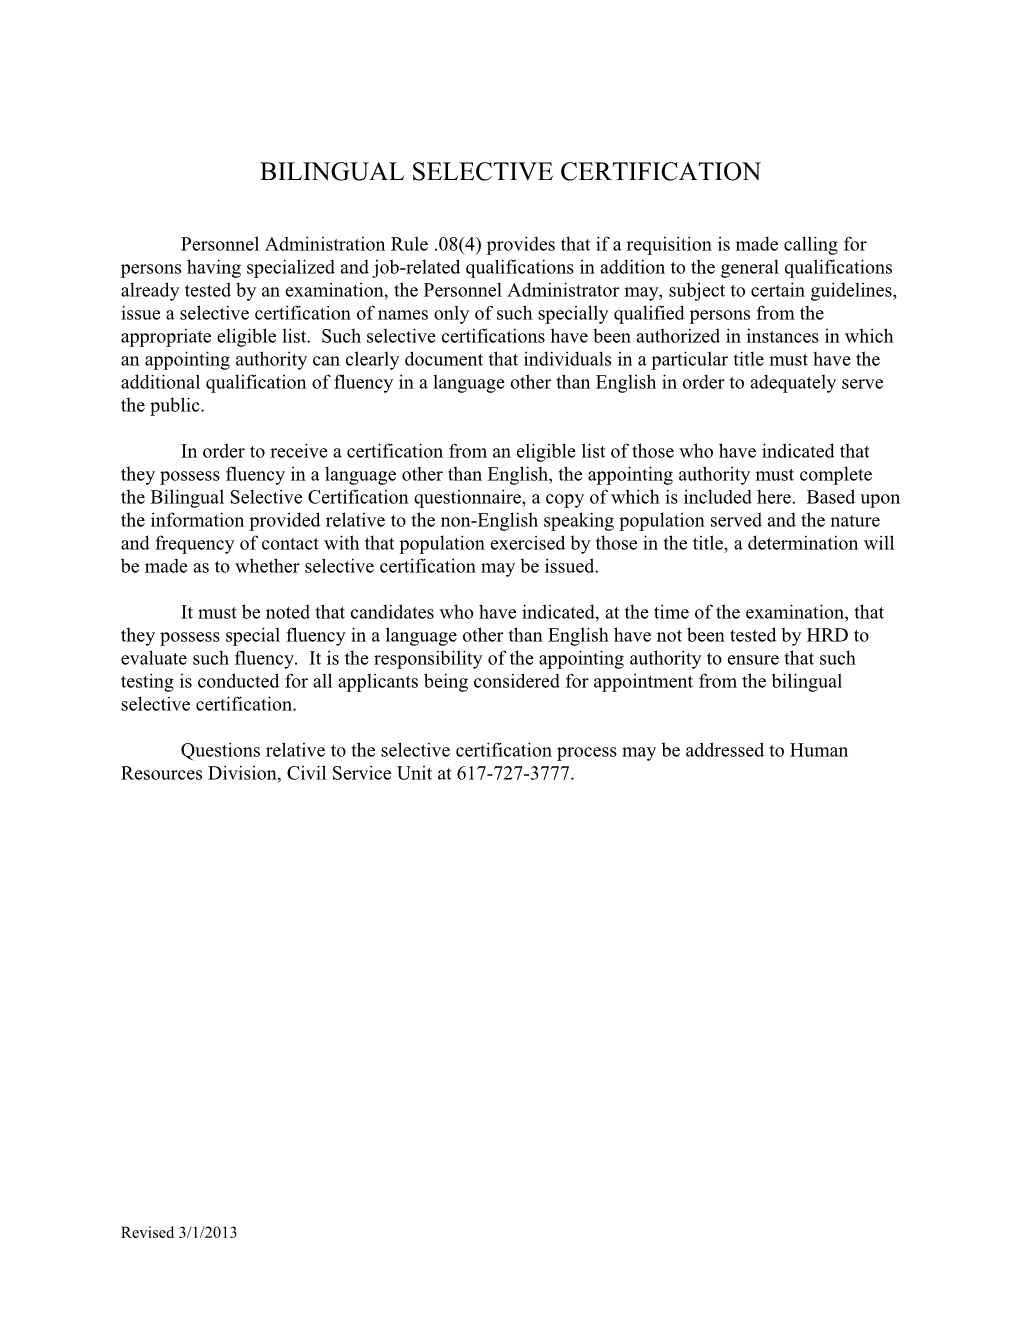 Bilingual Selective Certification